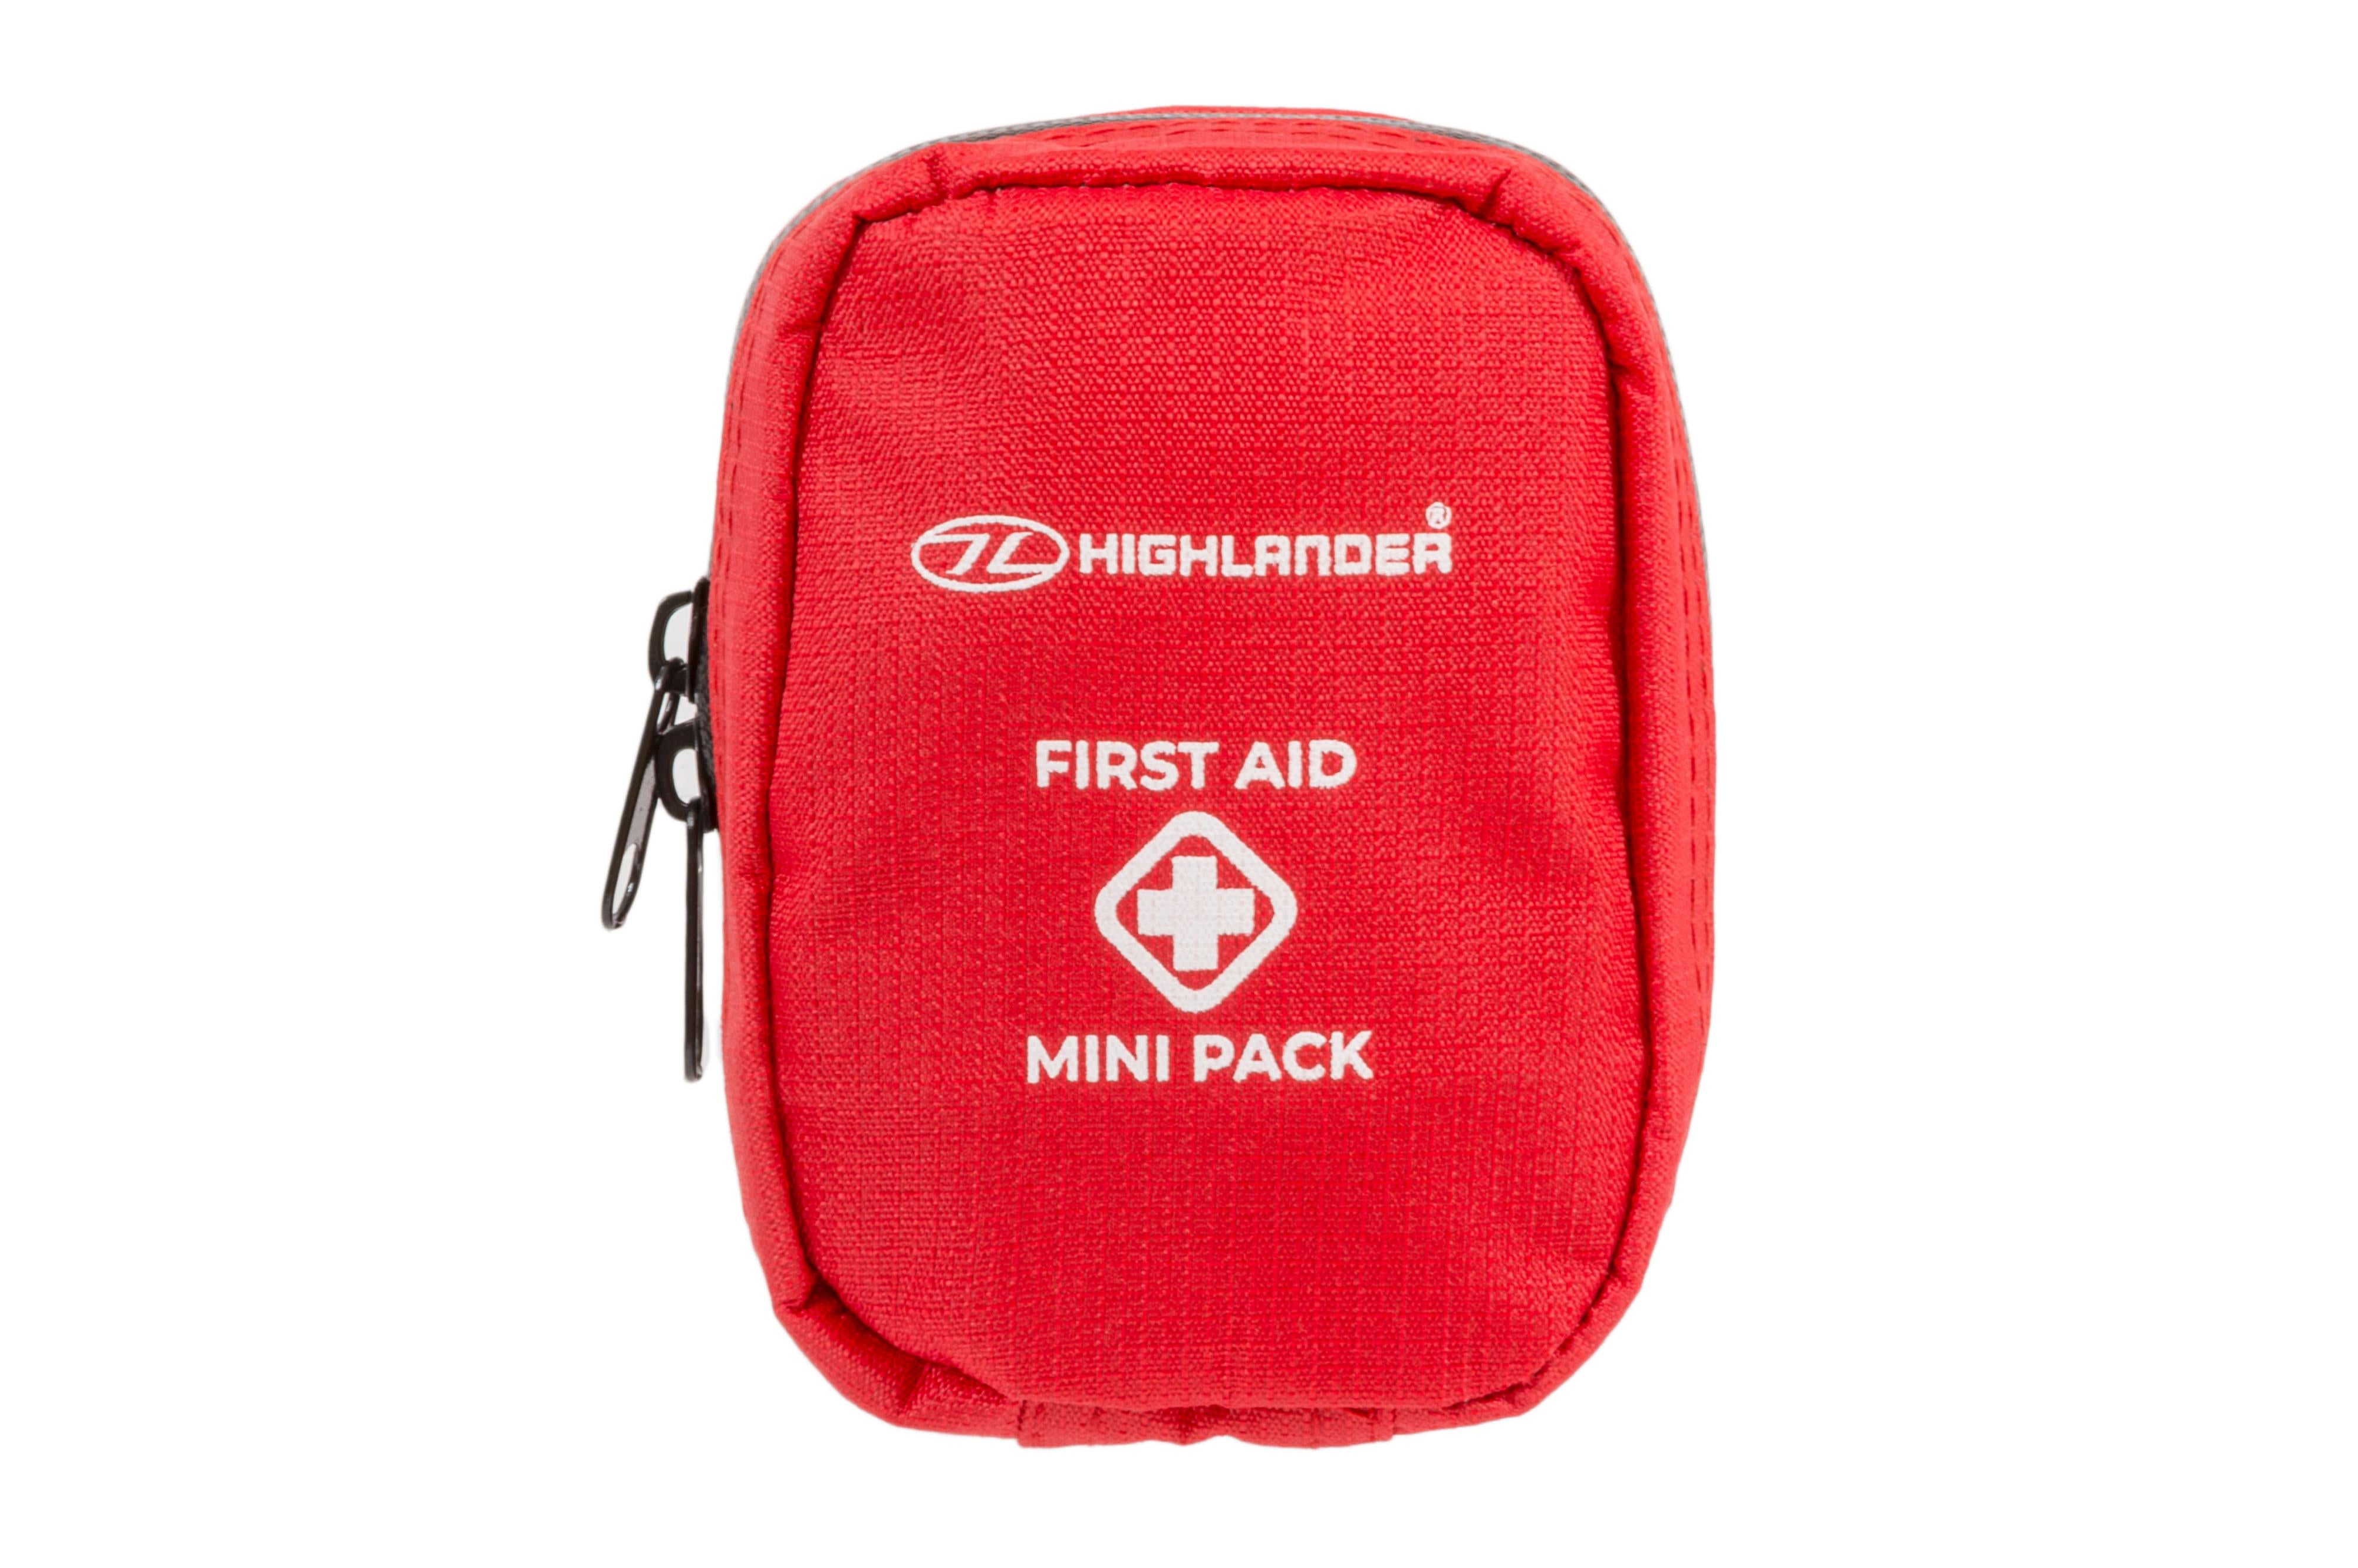 First Aid - Mini Pack